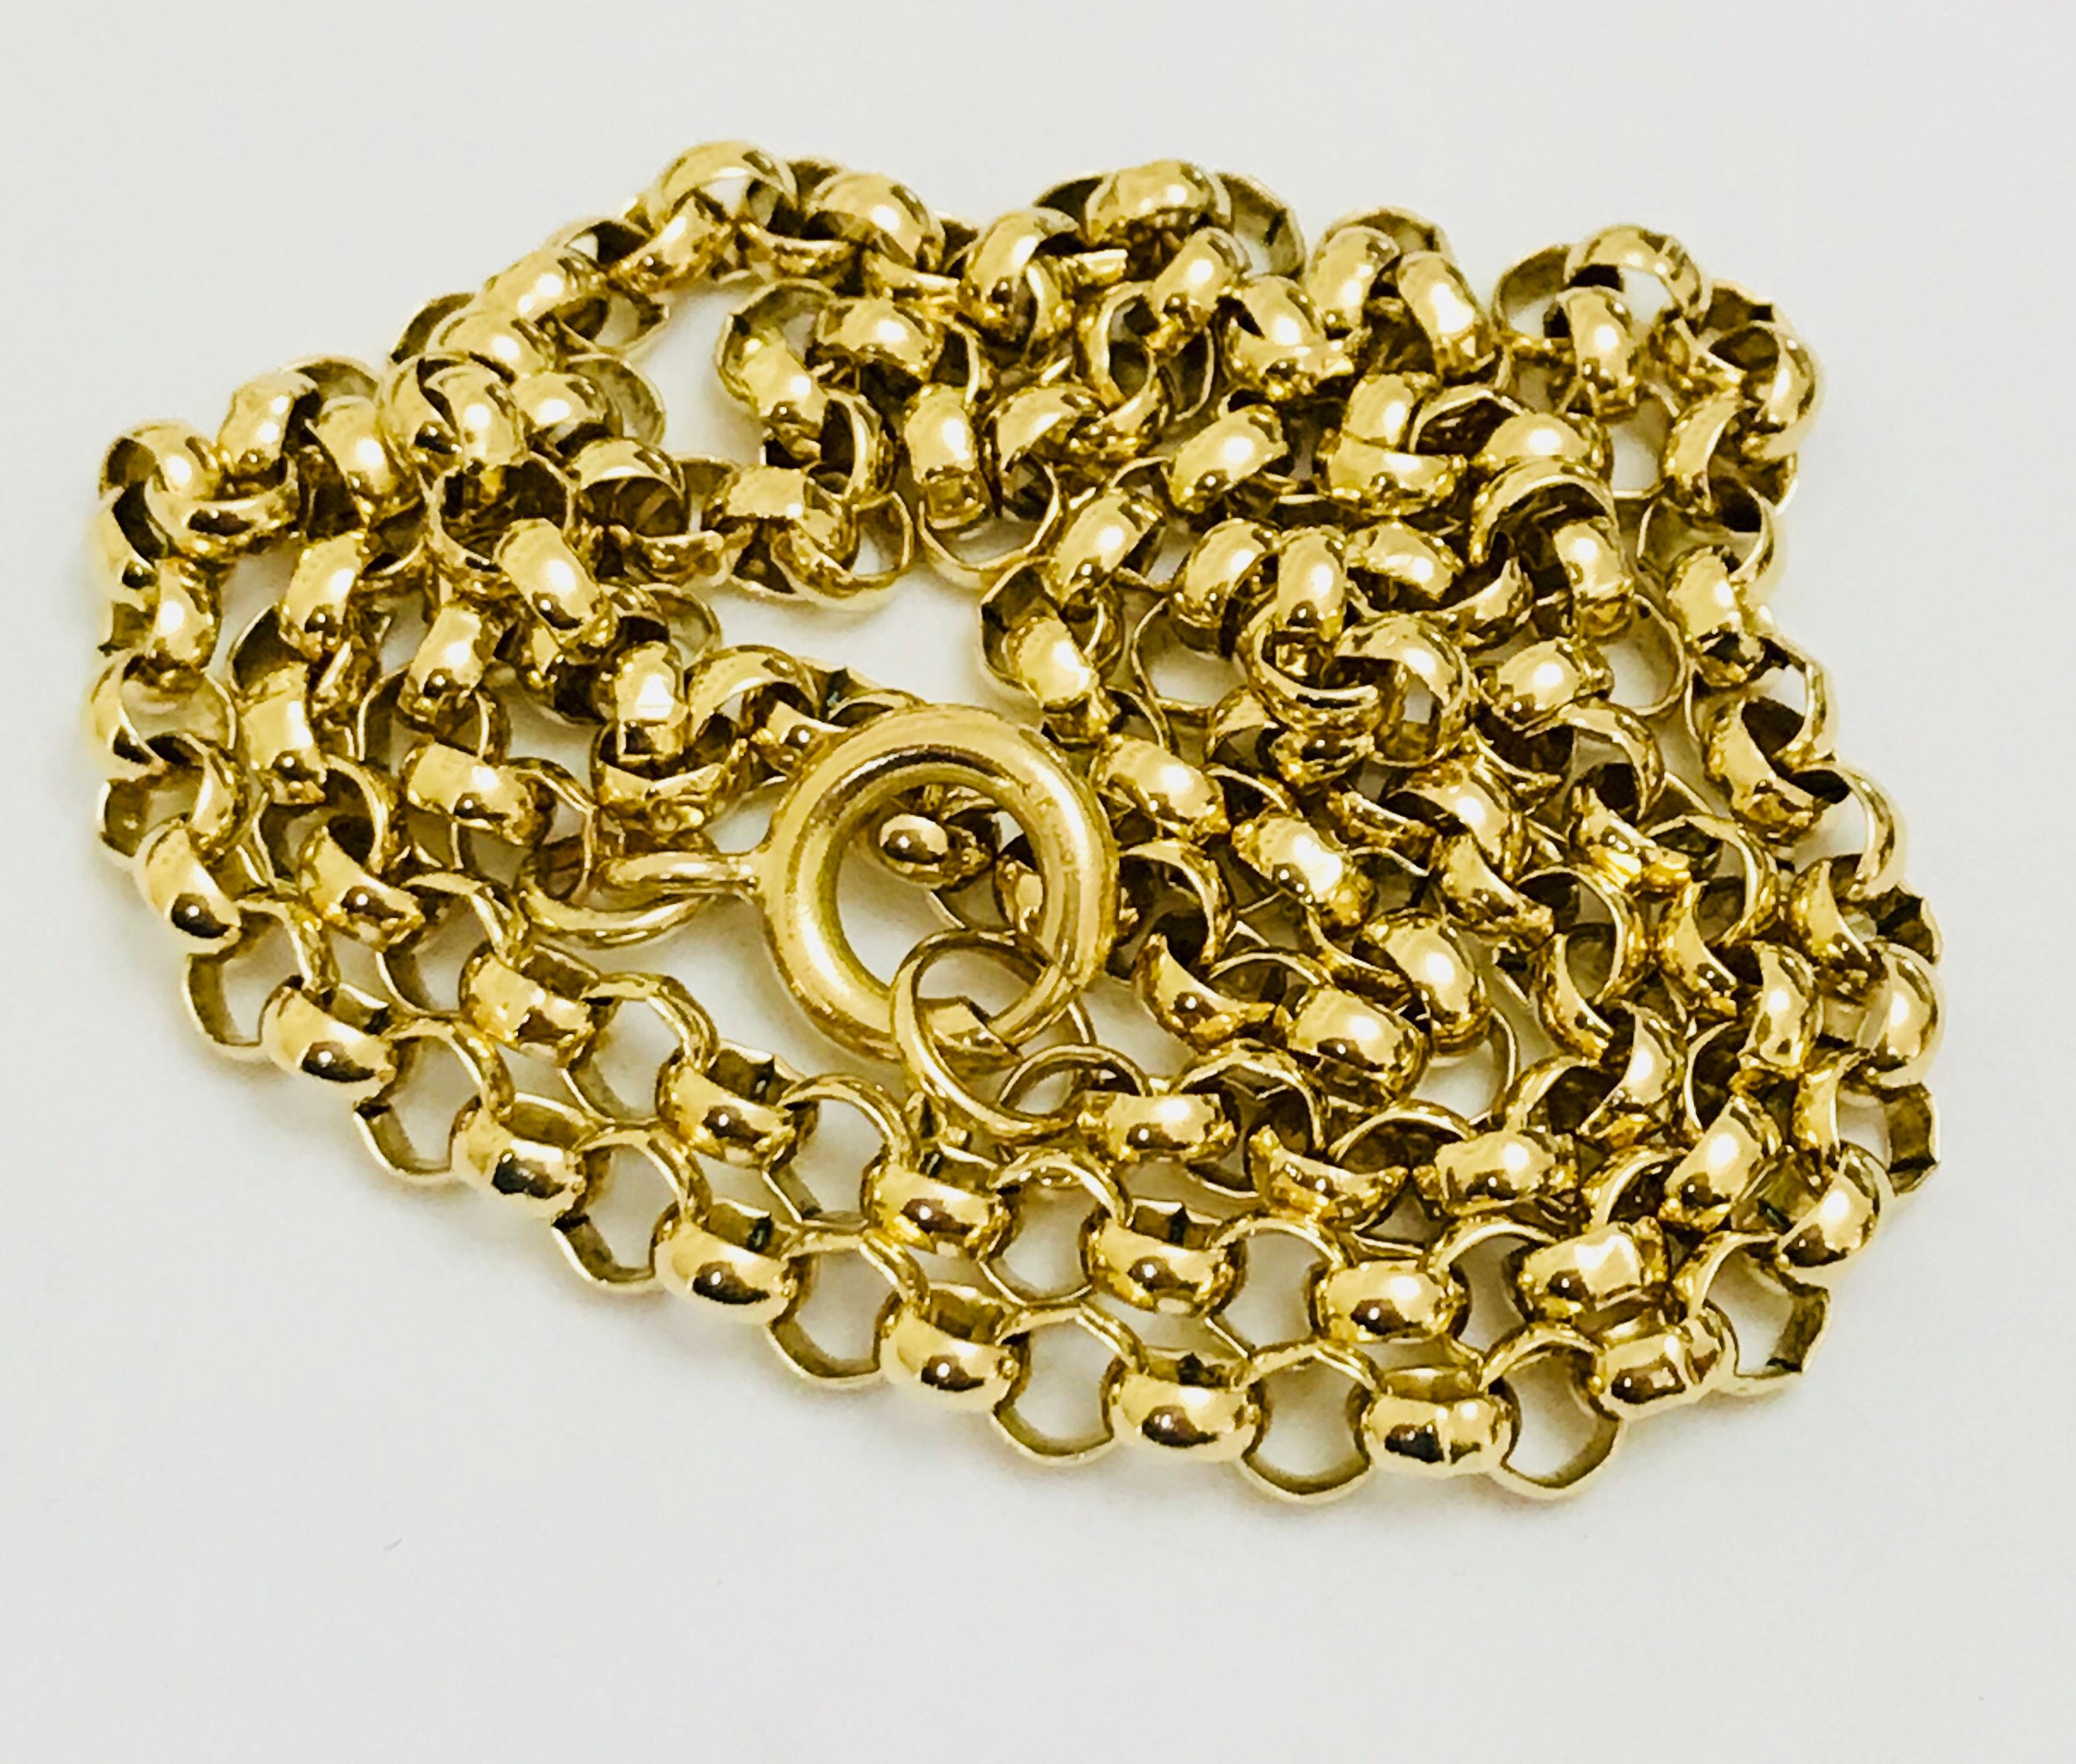 Stunning antique heavy 9ct yellow gold 22 inch belcher chain - 21gms